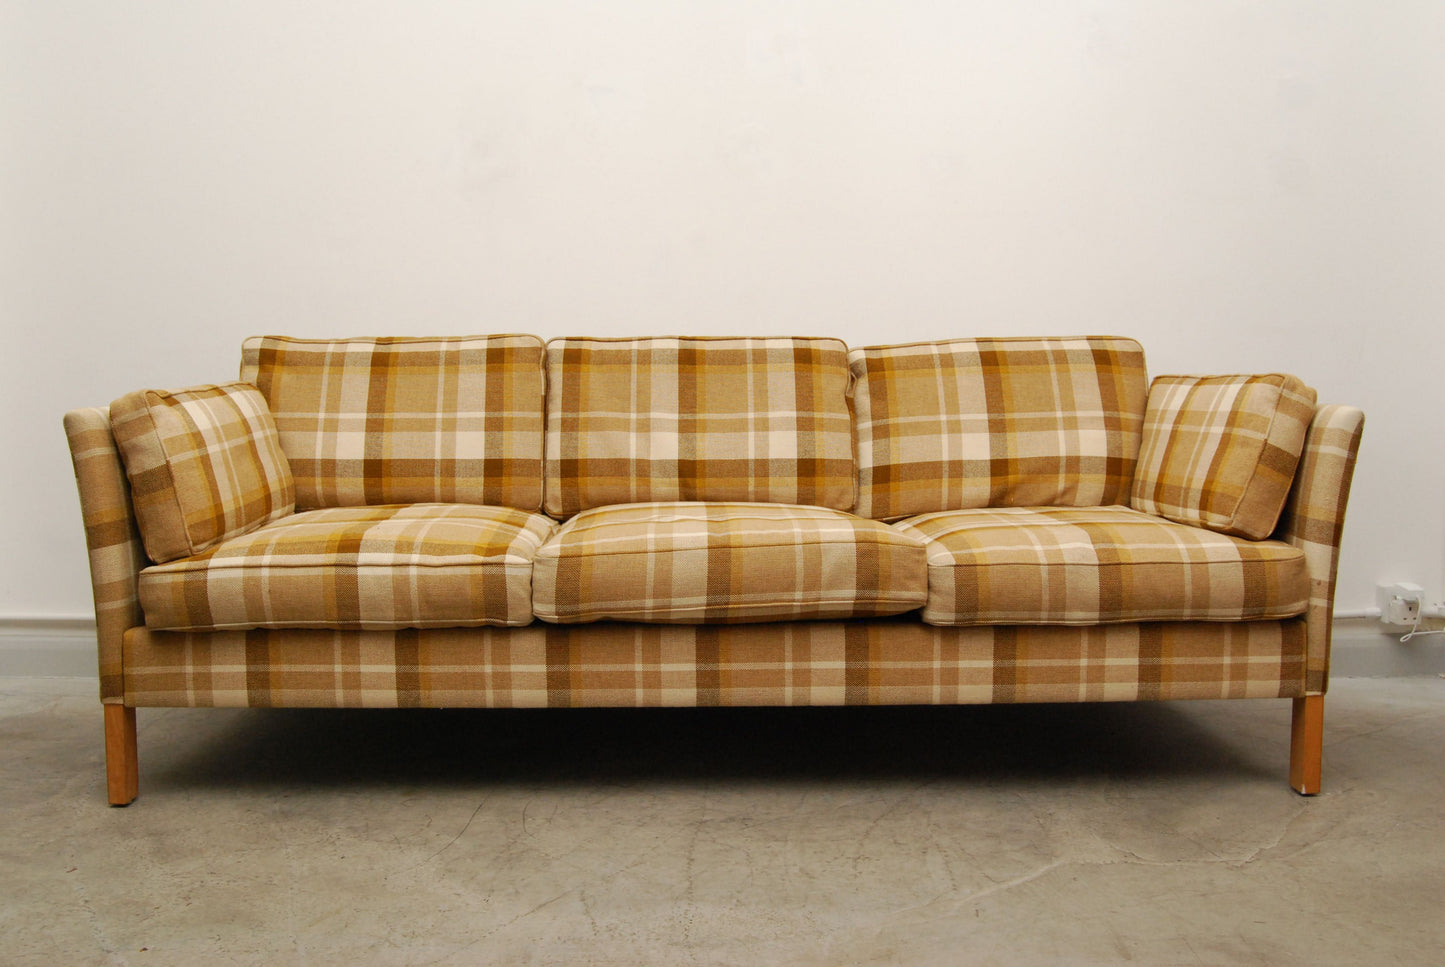 Three seat sofa by DUX